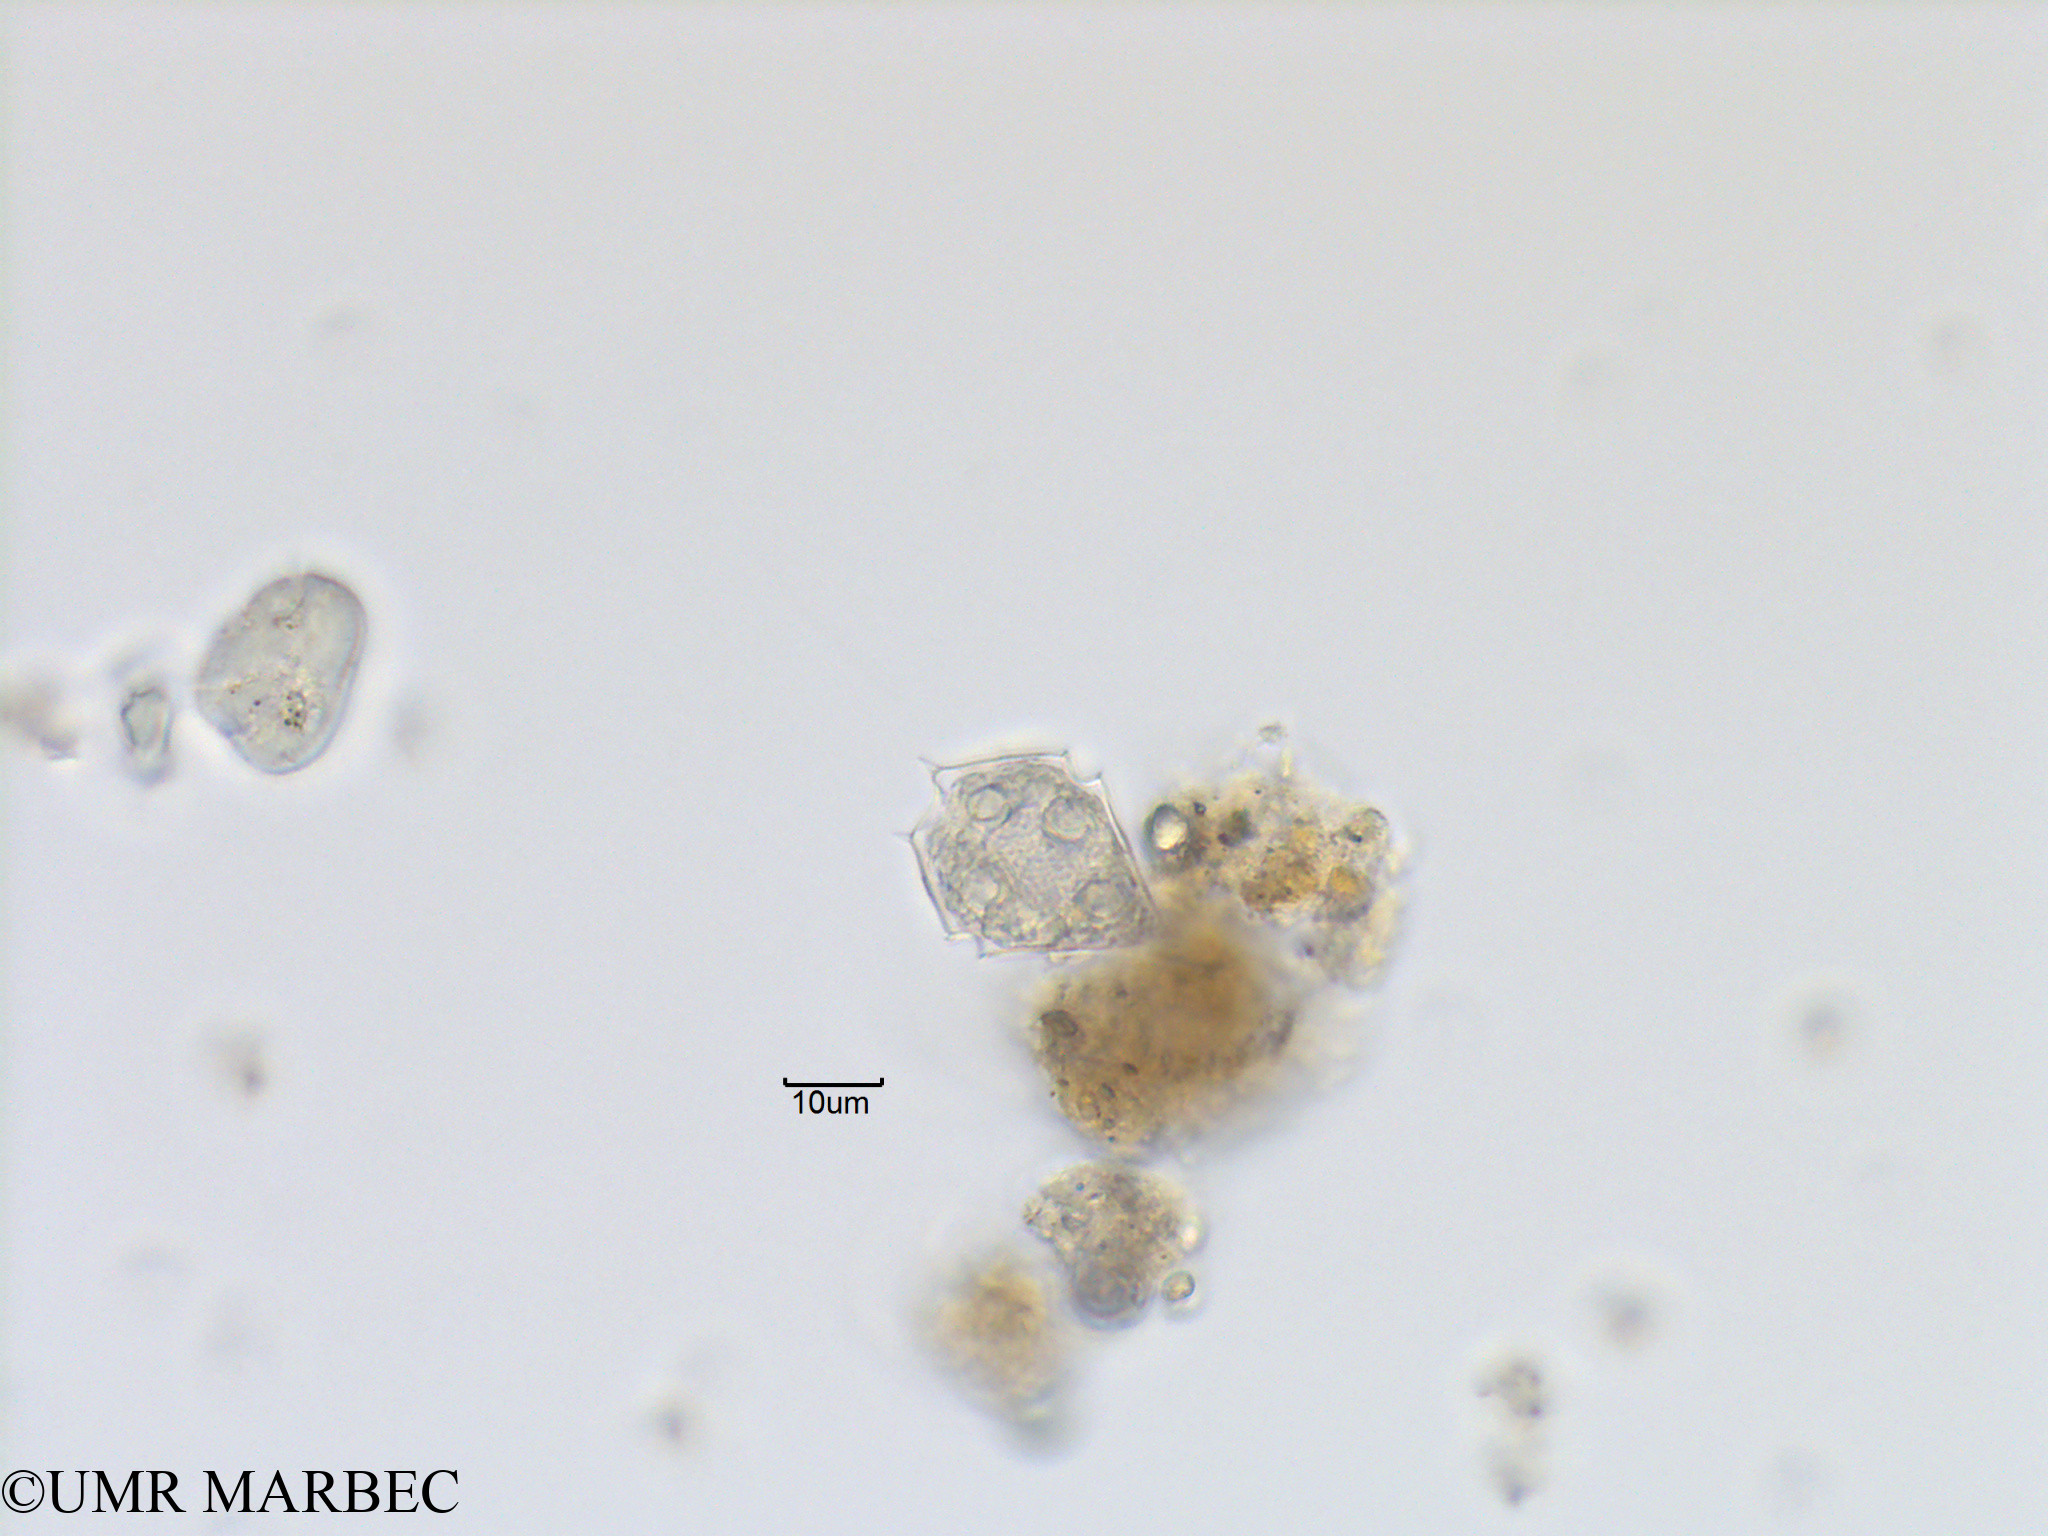 phyto/Bizerte/bizerte_lagoon/RISCO November 2015/Scrippsiella spinifera (Protoperidinium sp15-Lagune_T1_B_Dino b-1).tif(copy).jpg